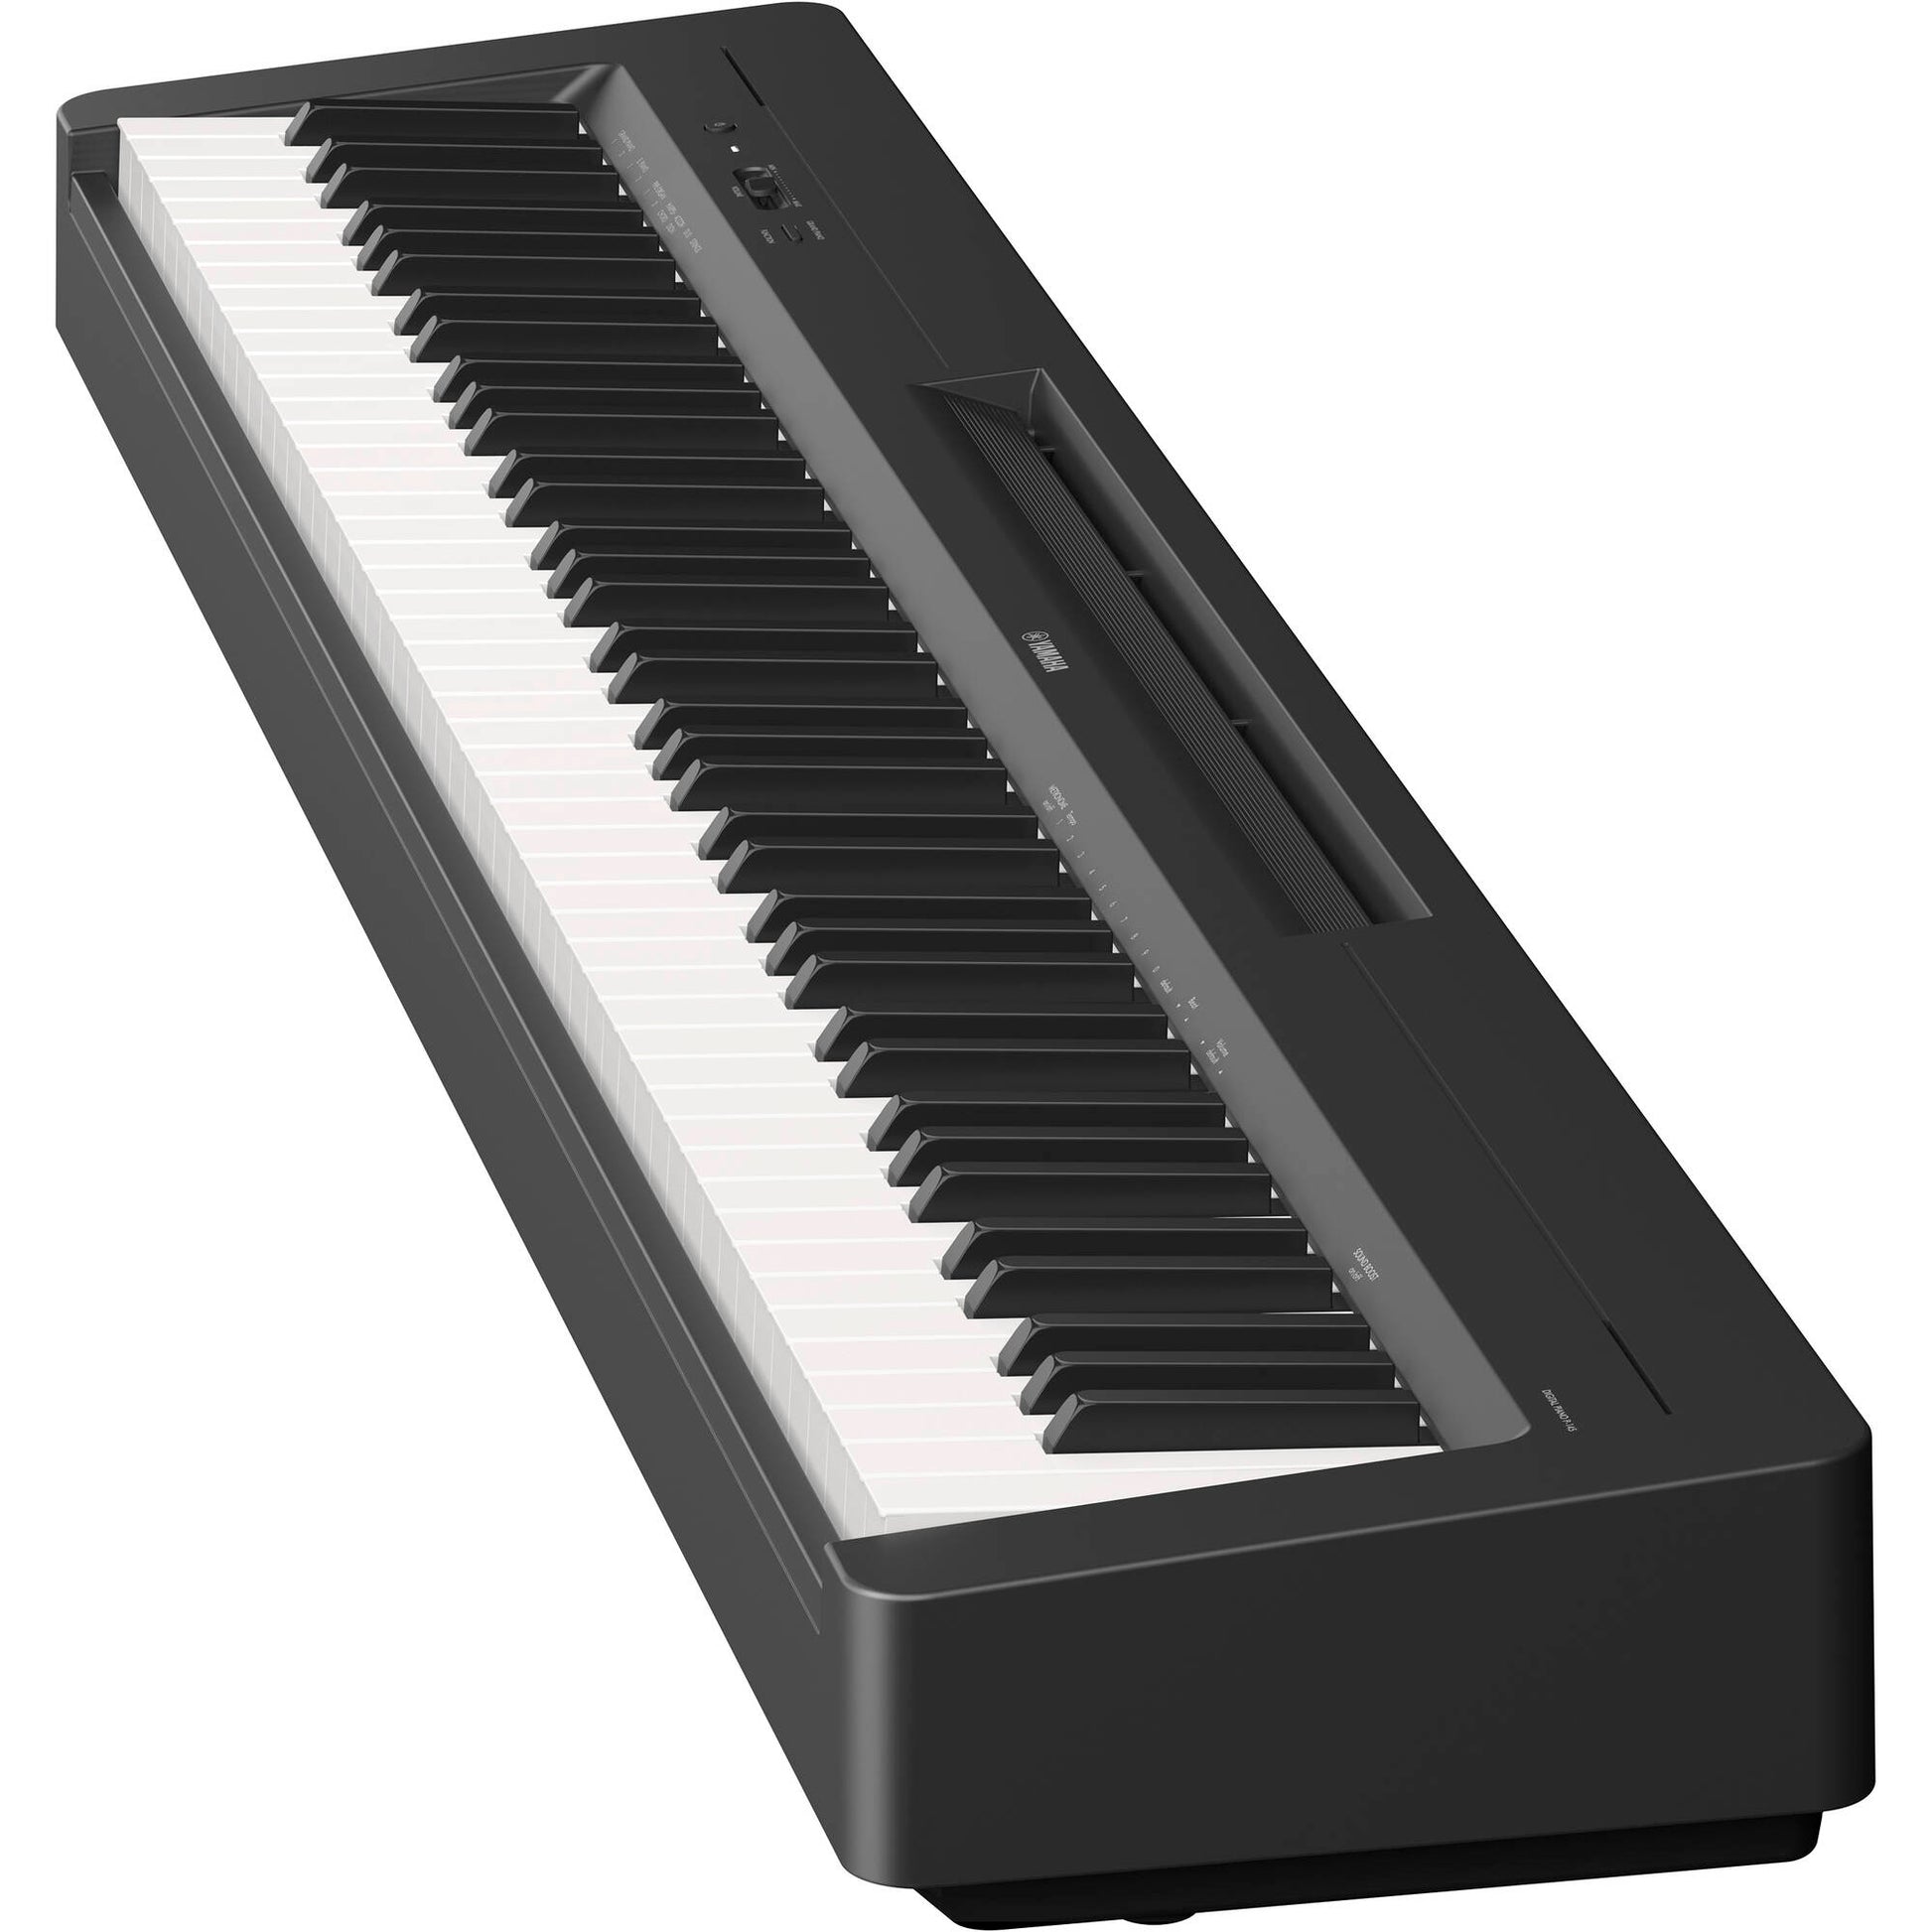 Yamaha – P-45 Black Piano Digital (incluye adaptador Yamaha